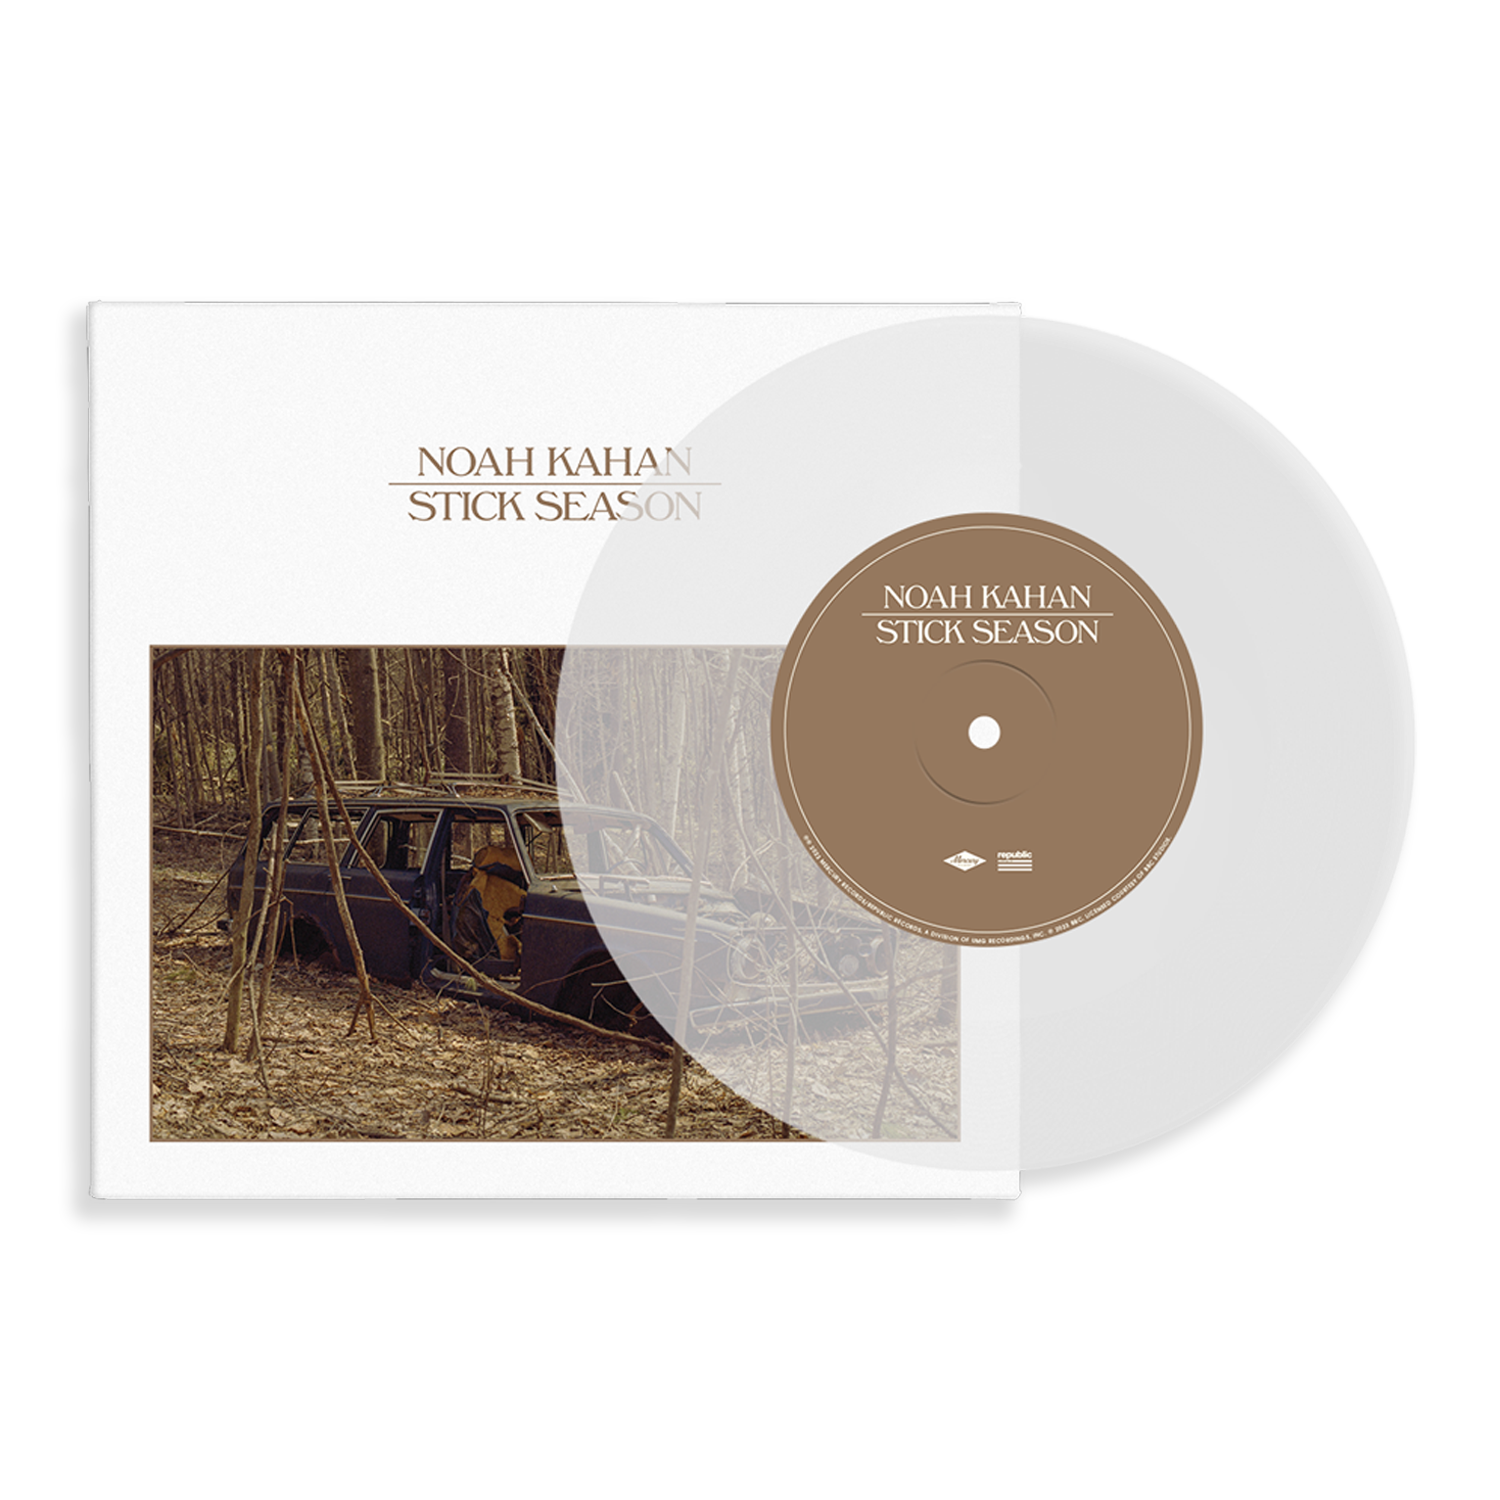 NOAH KAHAN Stick Season Vinyl LP Record Album [IN HAND, SHIPS NOW!!] 🆕 ✓  602448519122